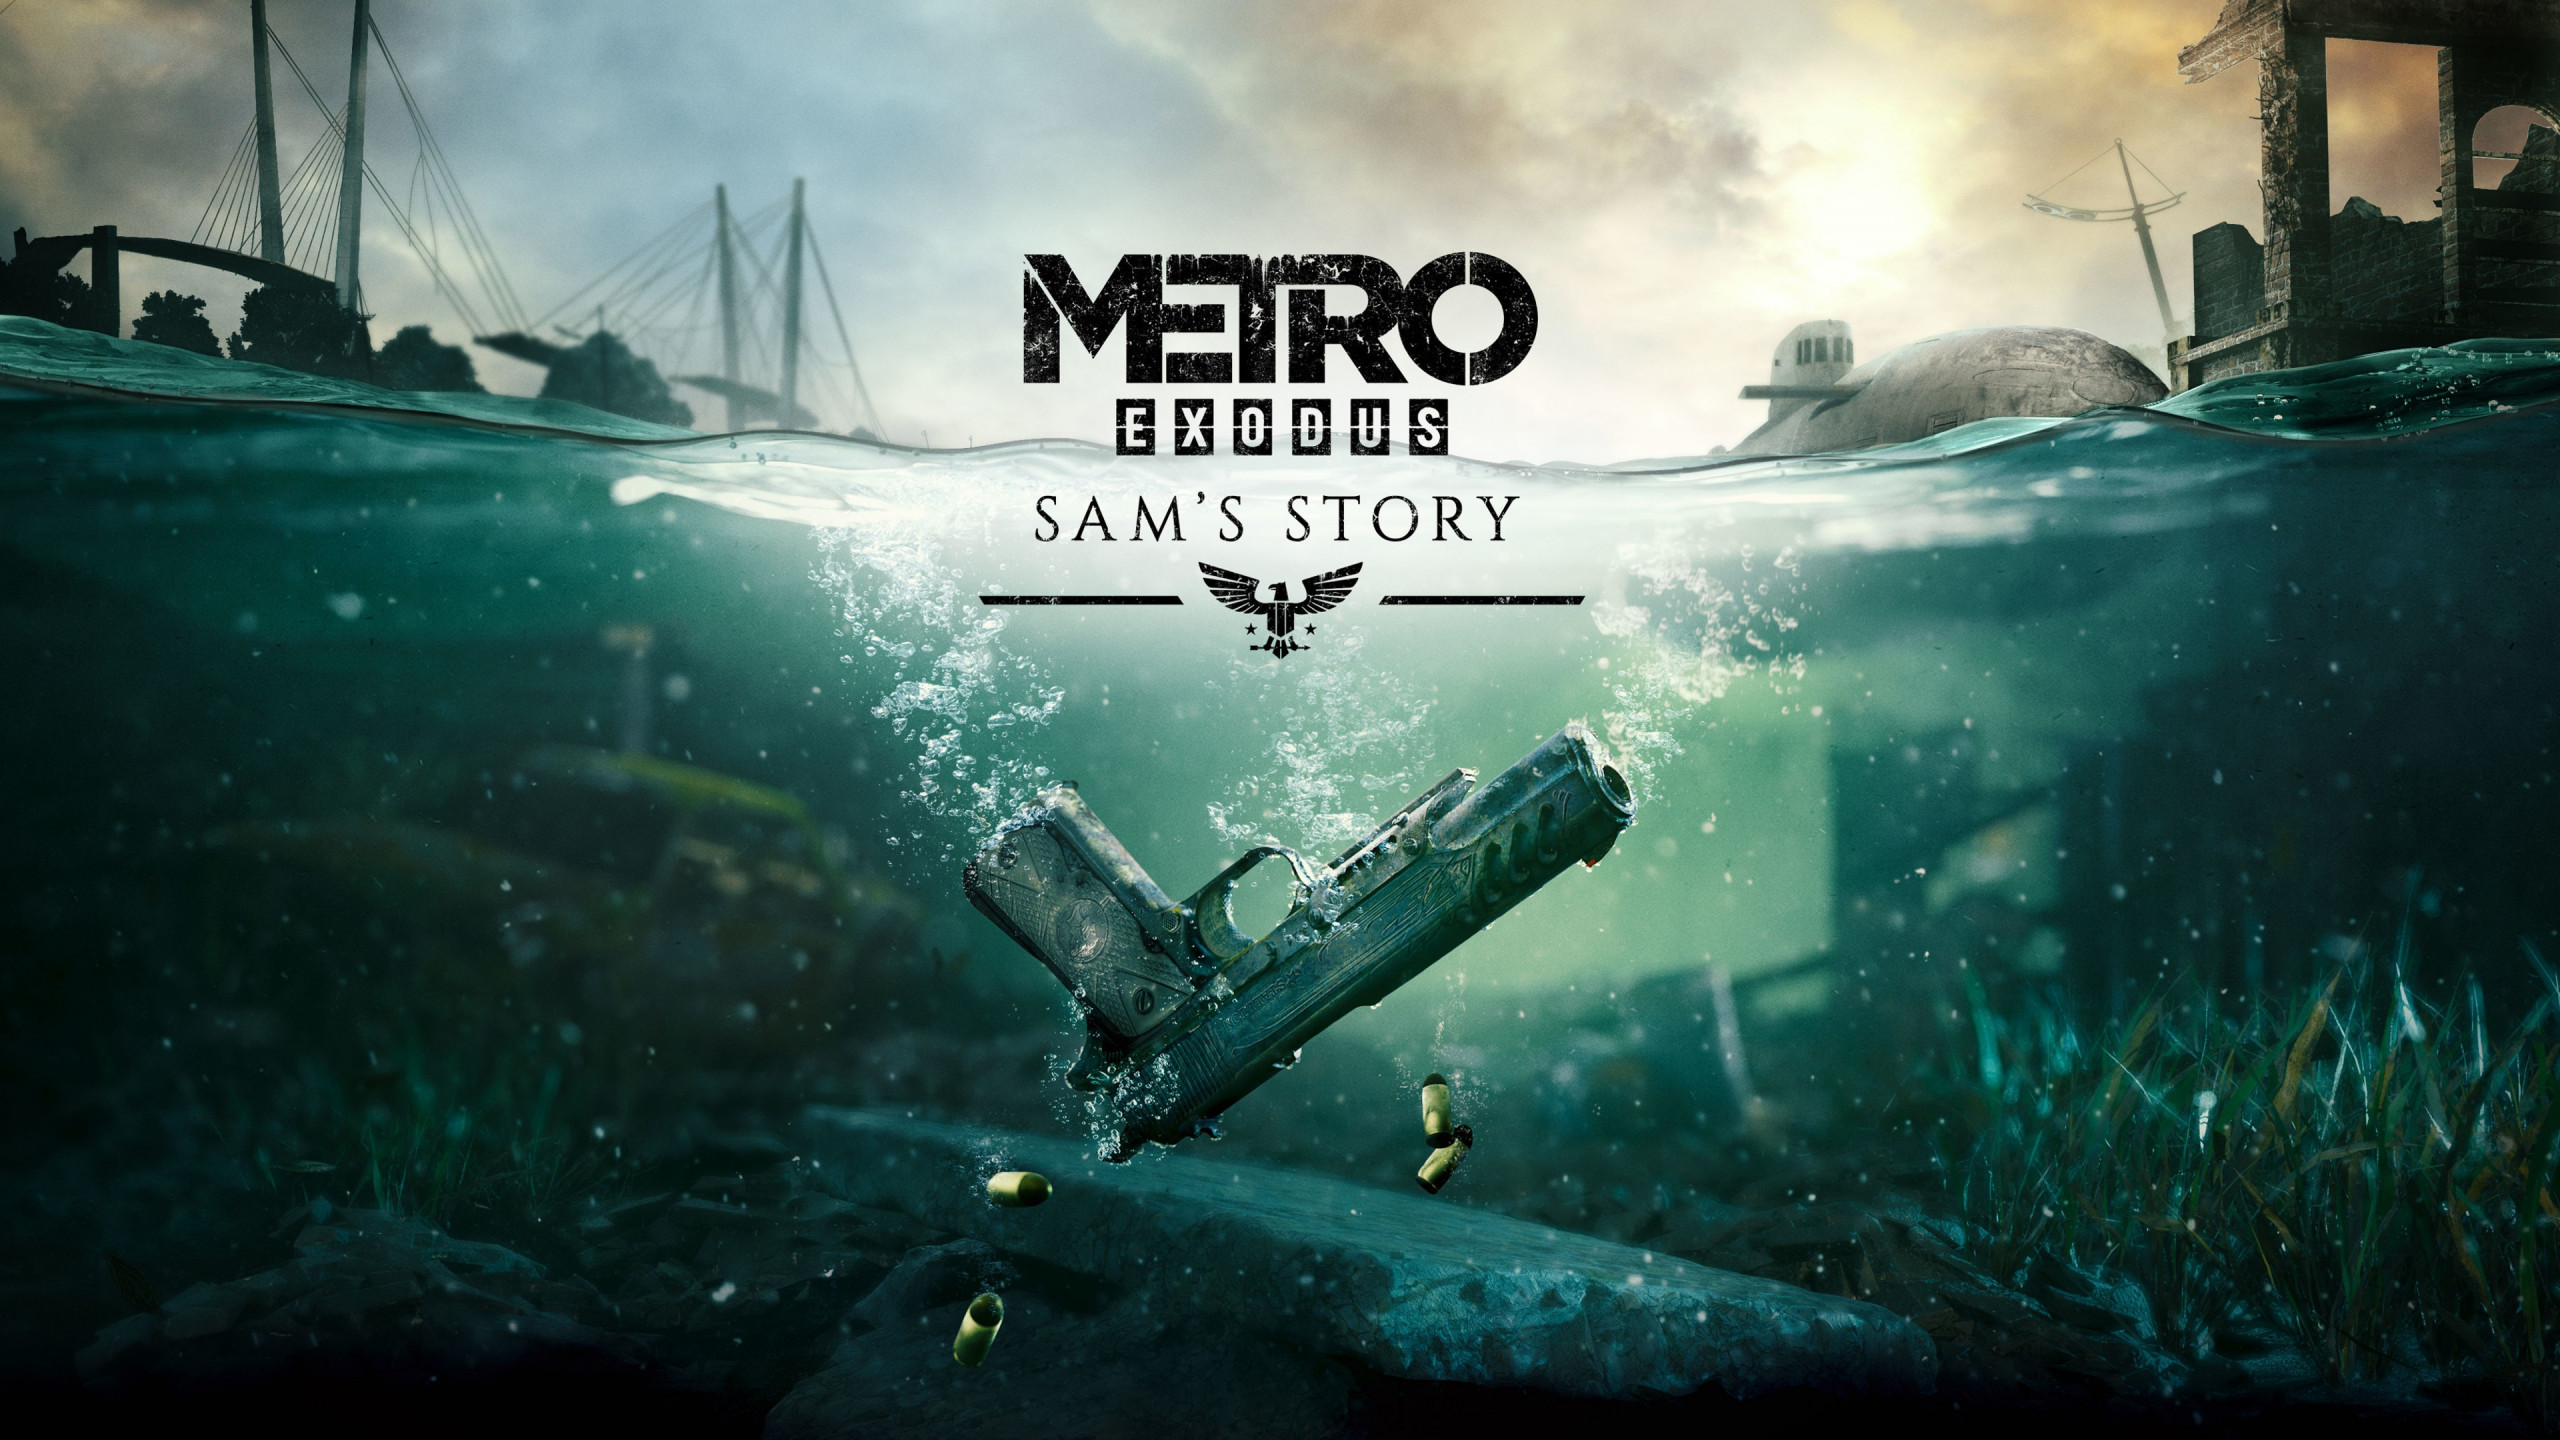 Metro Exodus Sam's Story wallpaper 2560x1440